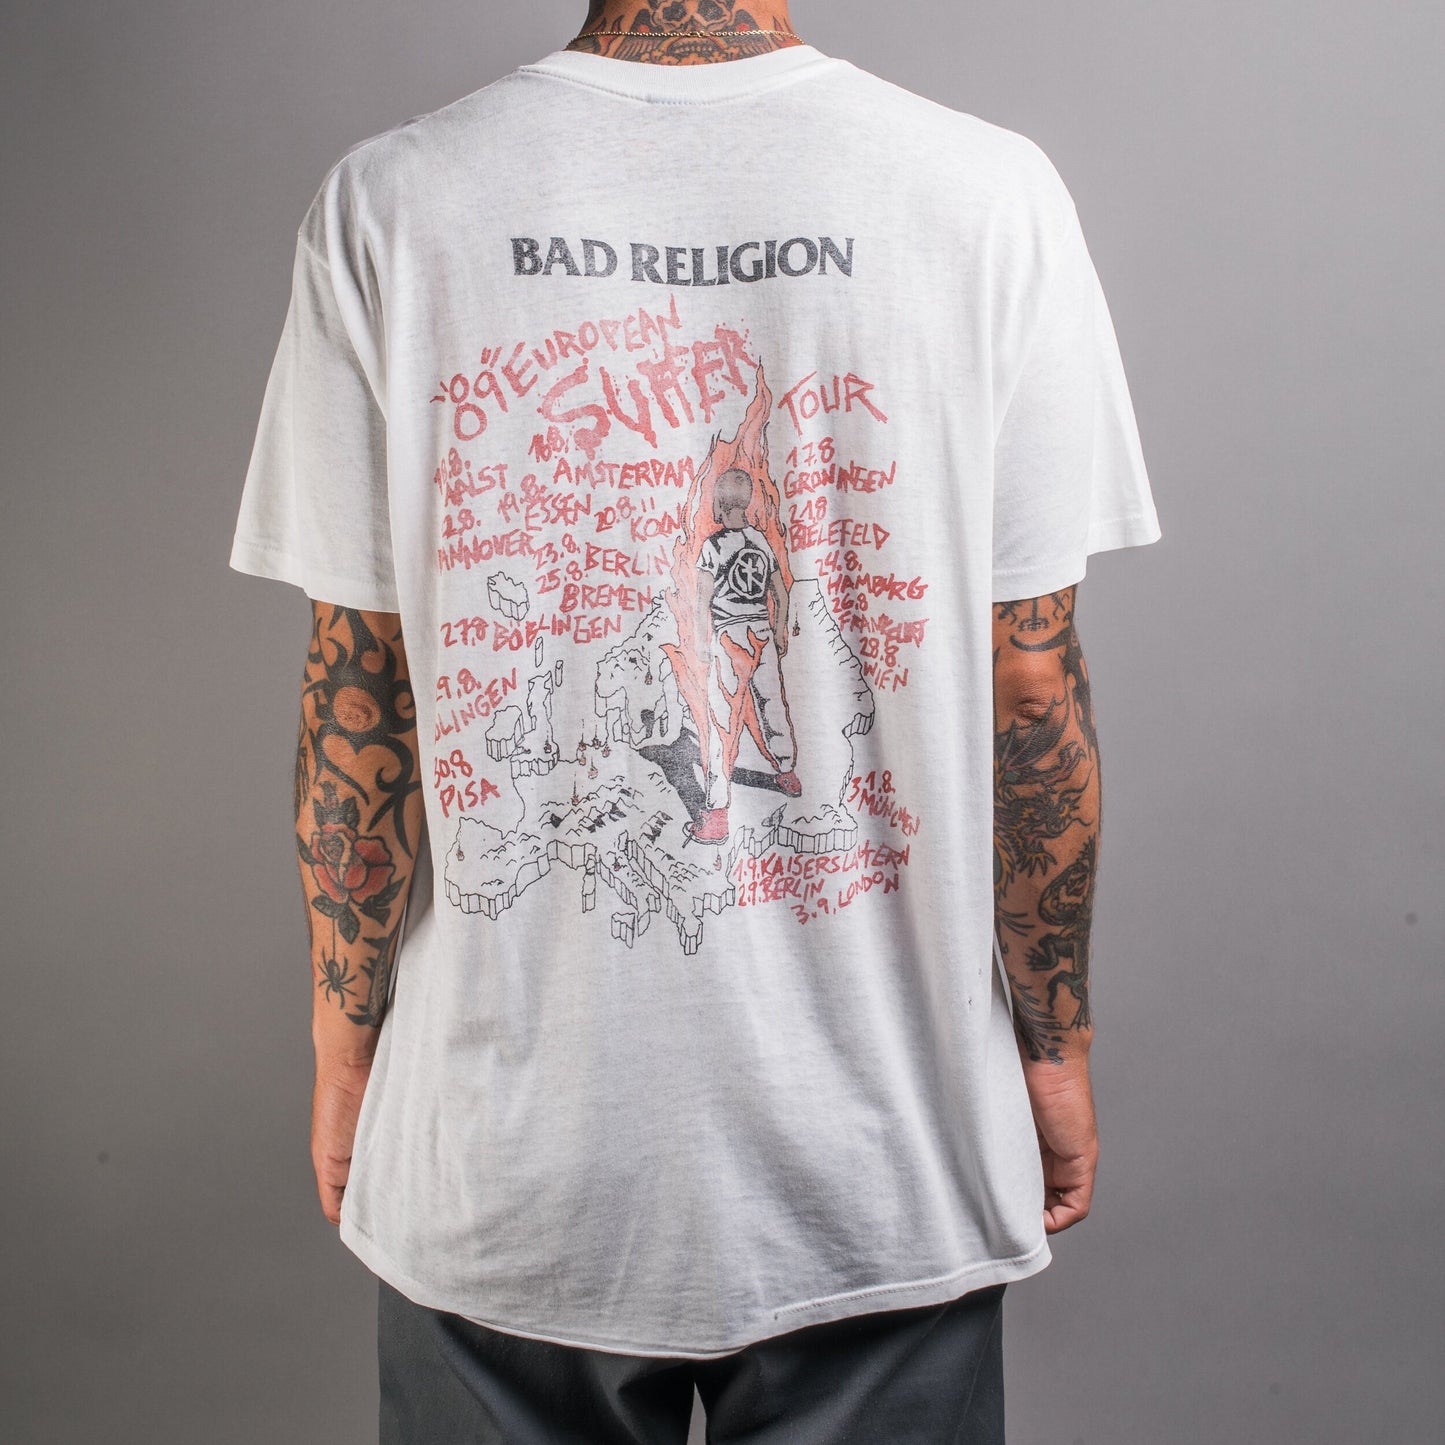 Vintage 1989 Bad Religion Suffer European Tour T-Shirt